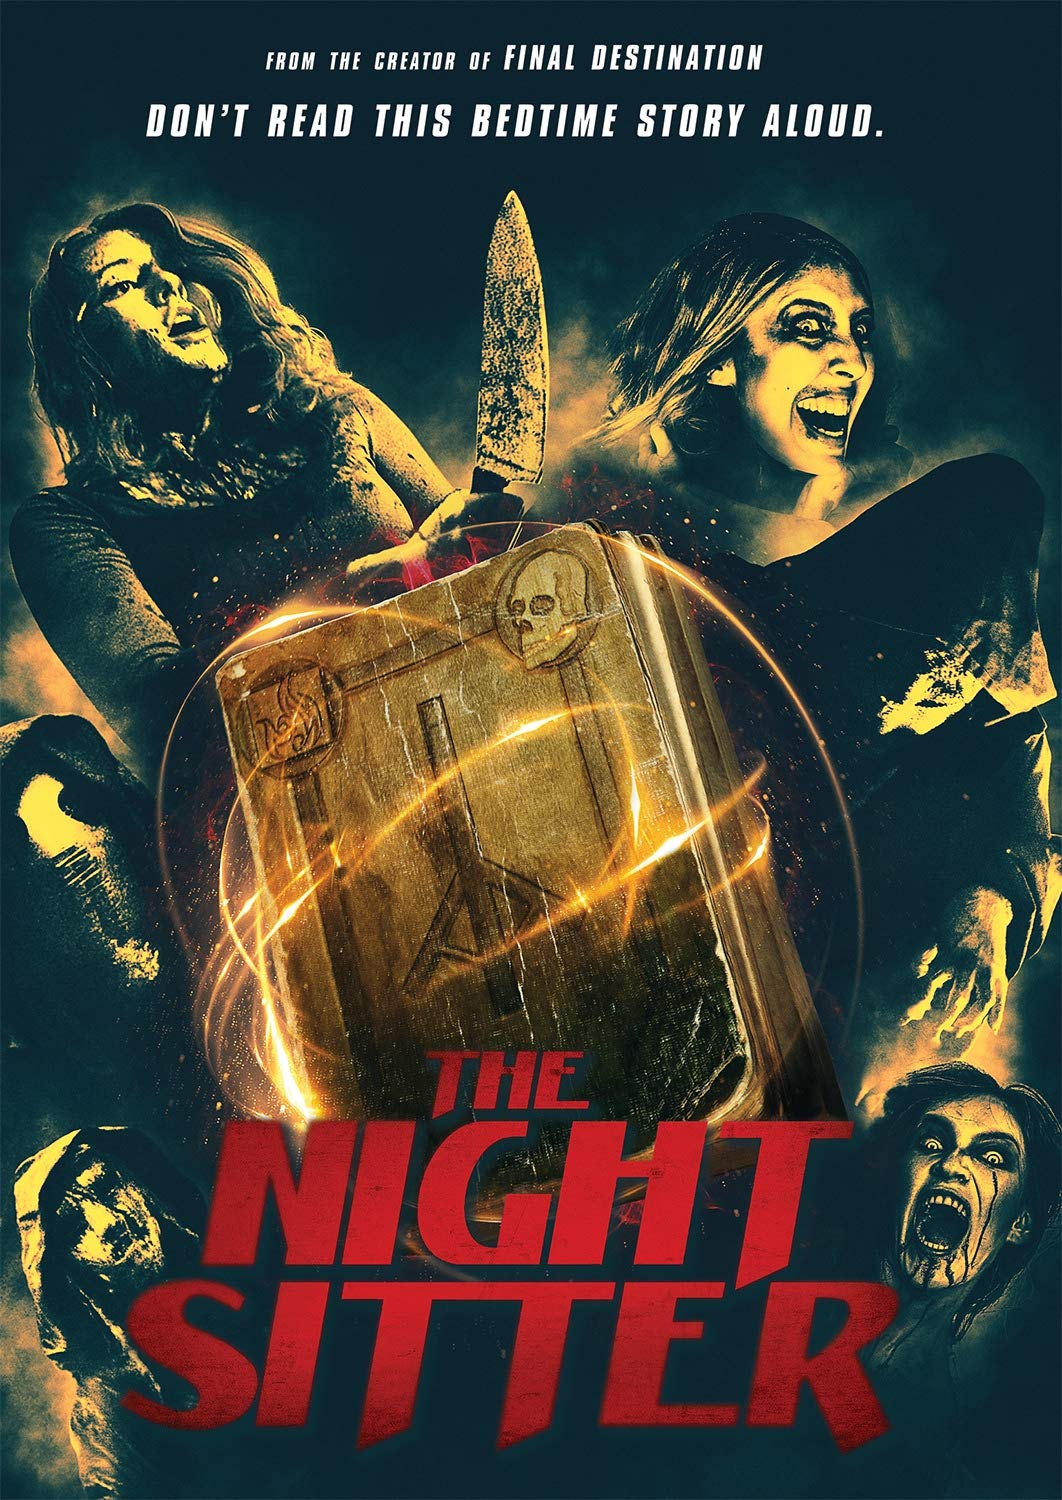 The Night Sitter DVD